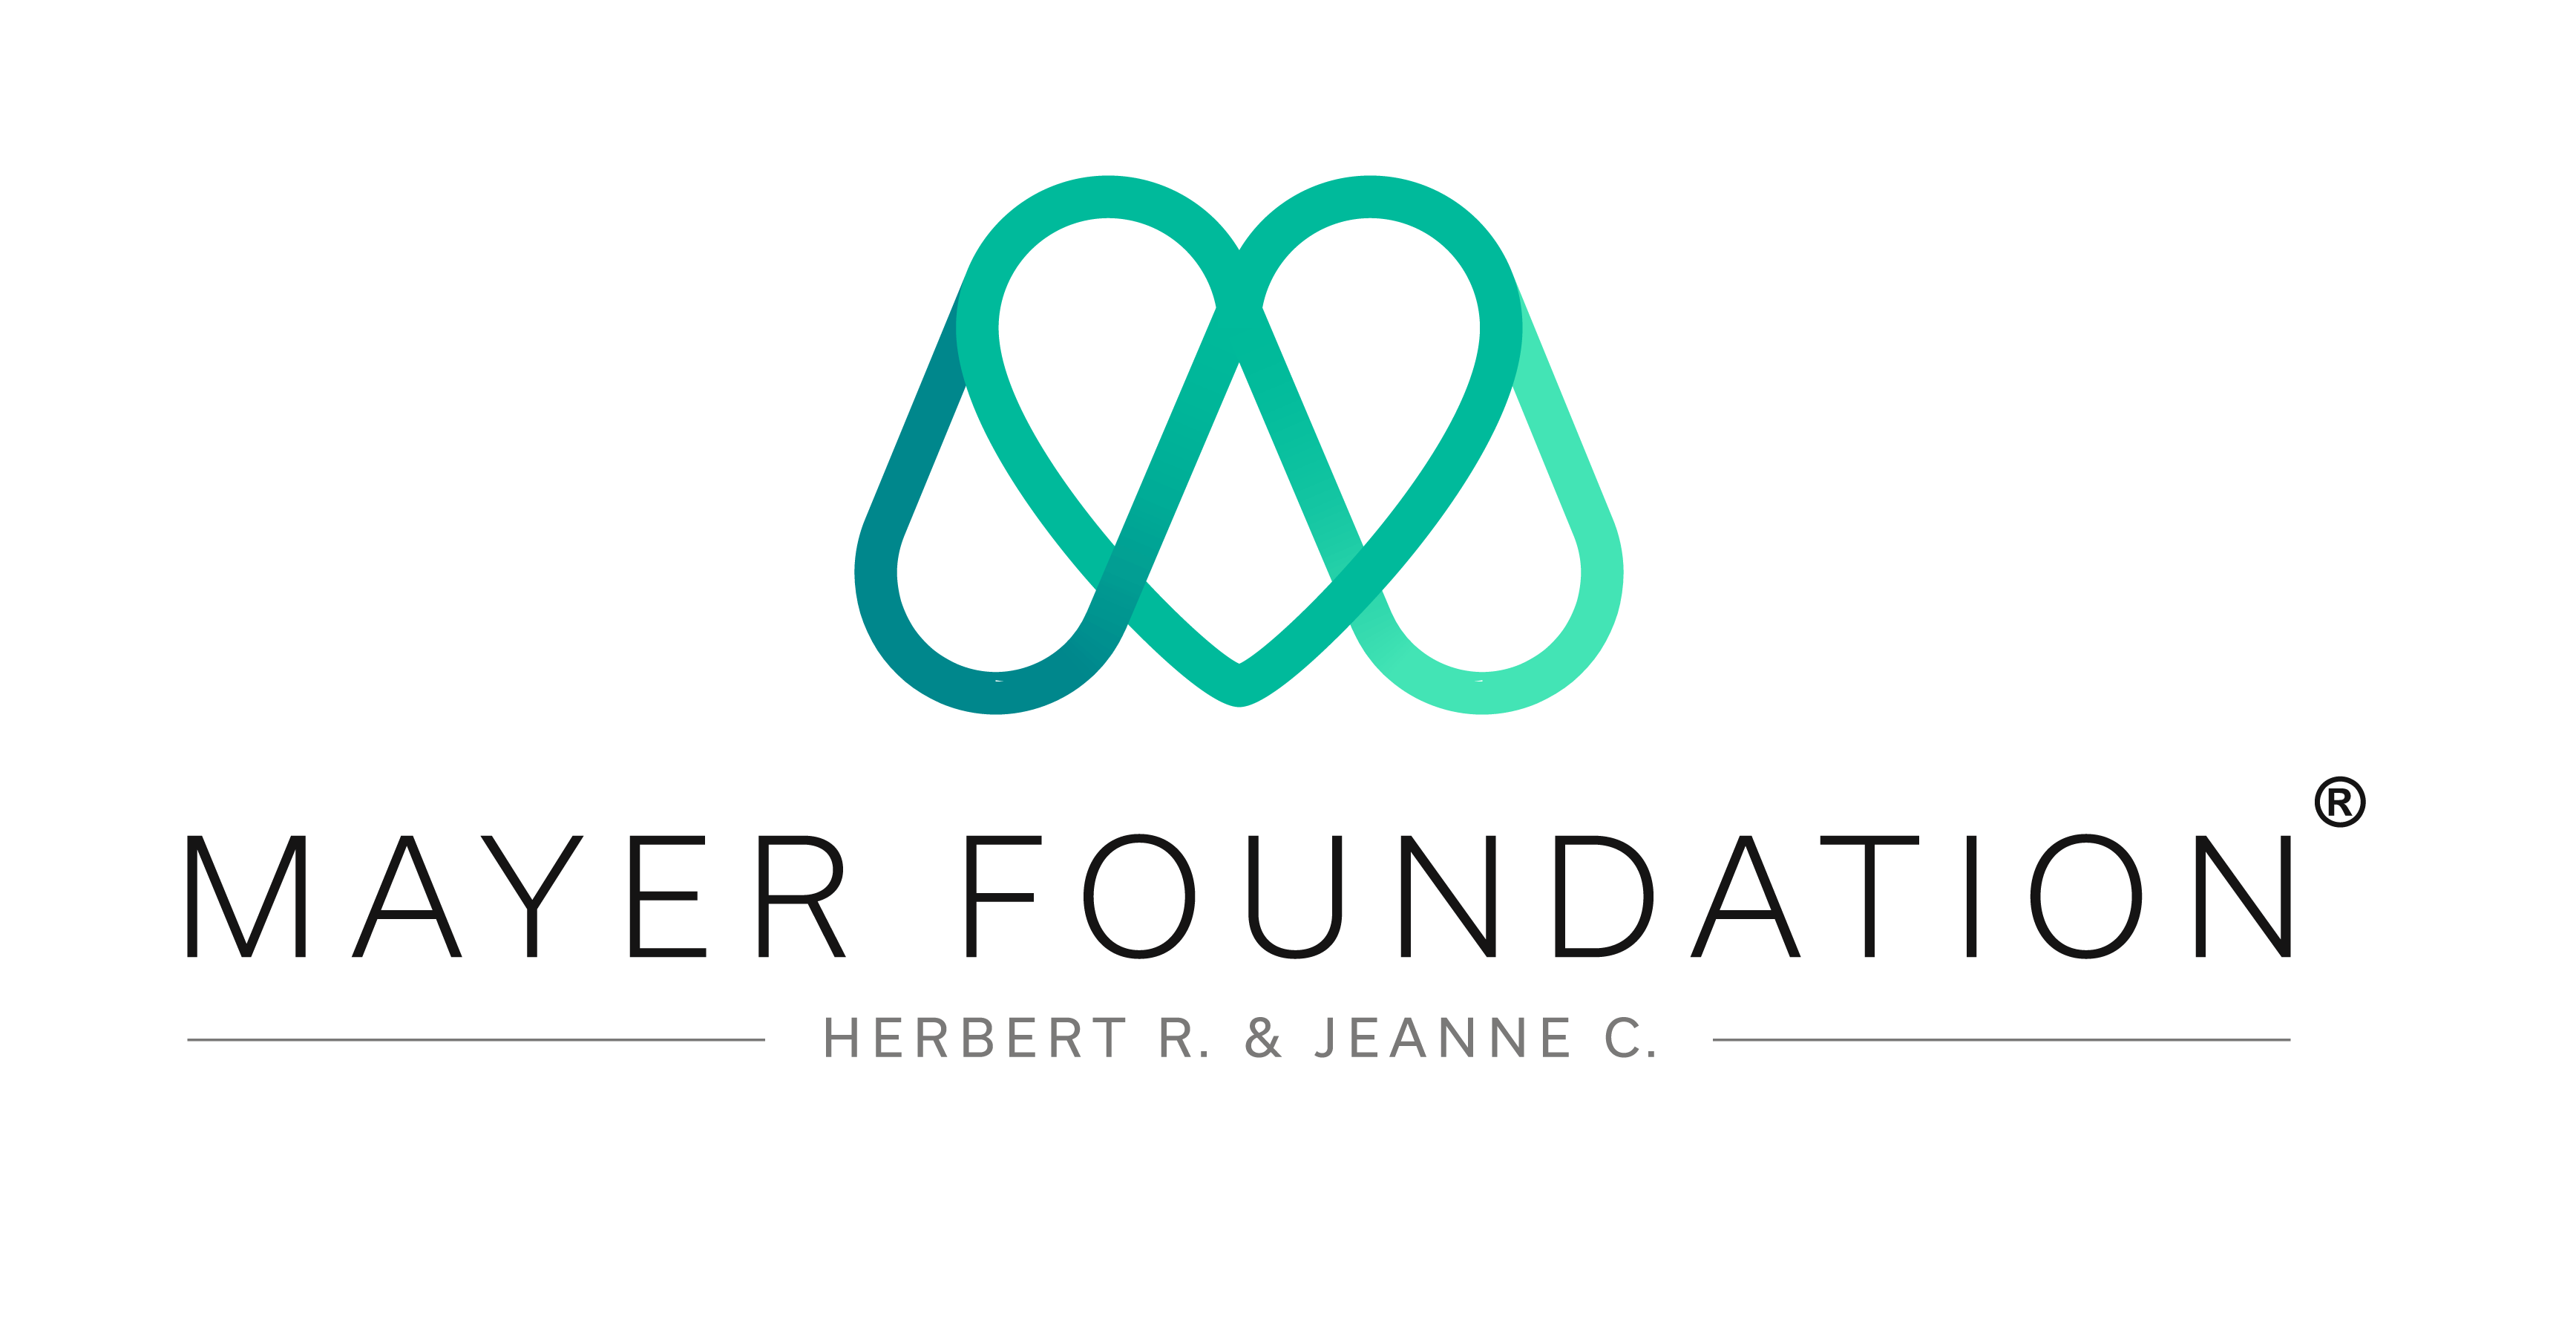 The Mayer Foundation (Herbert R. & Jeanne C.) logo